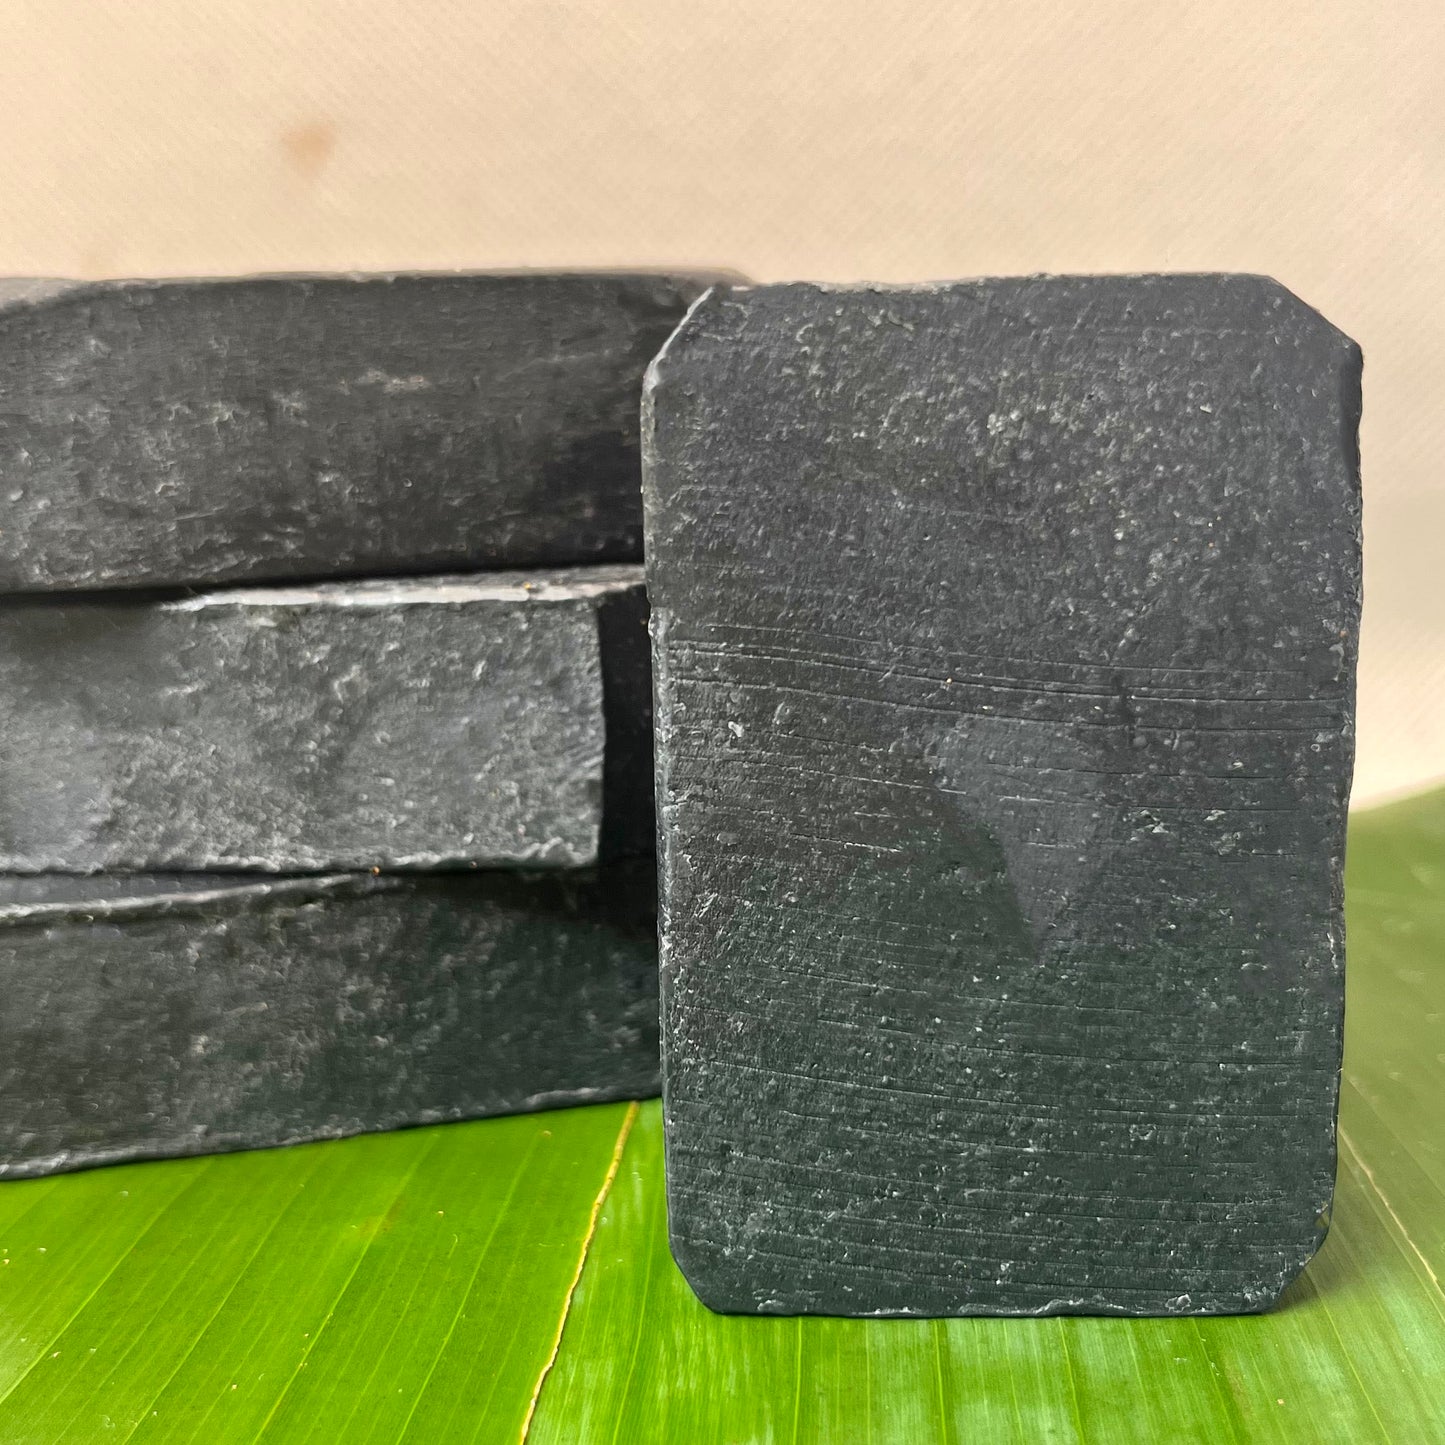 Bamboo Charcoal Sulfur Soap